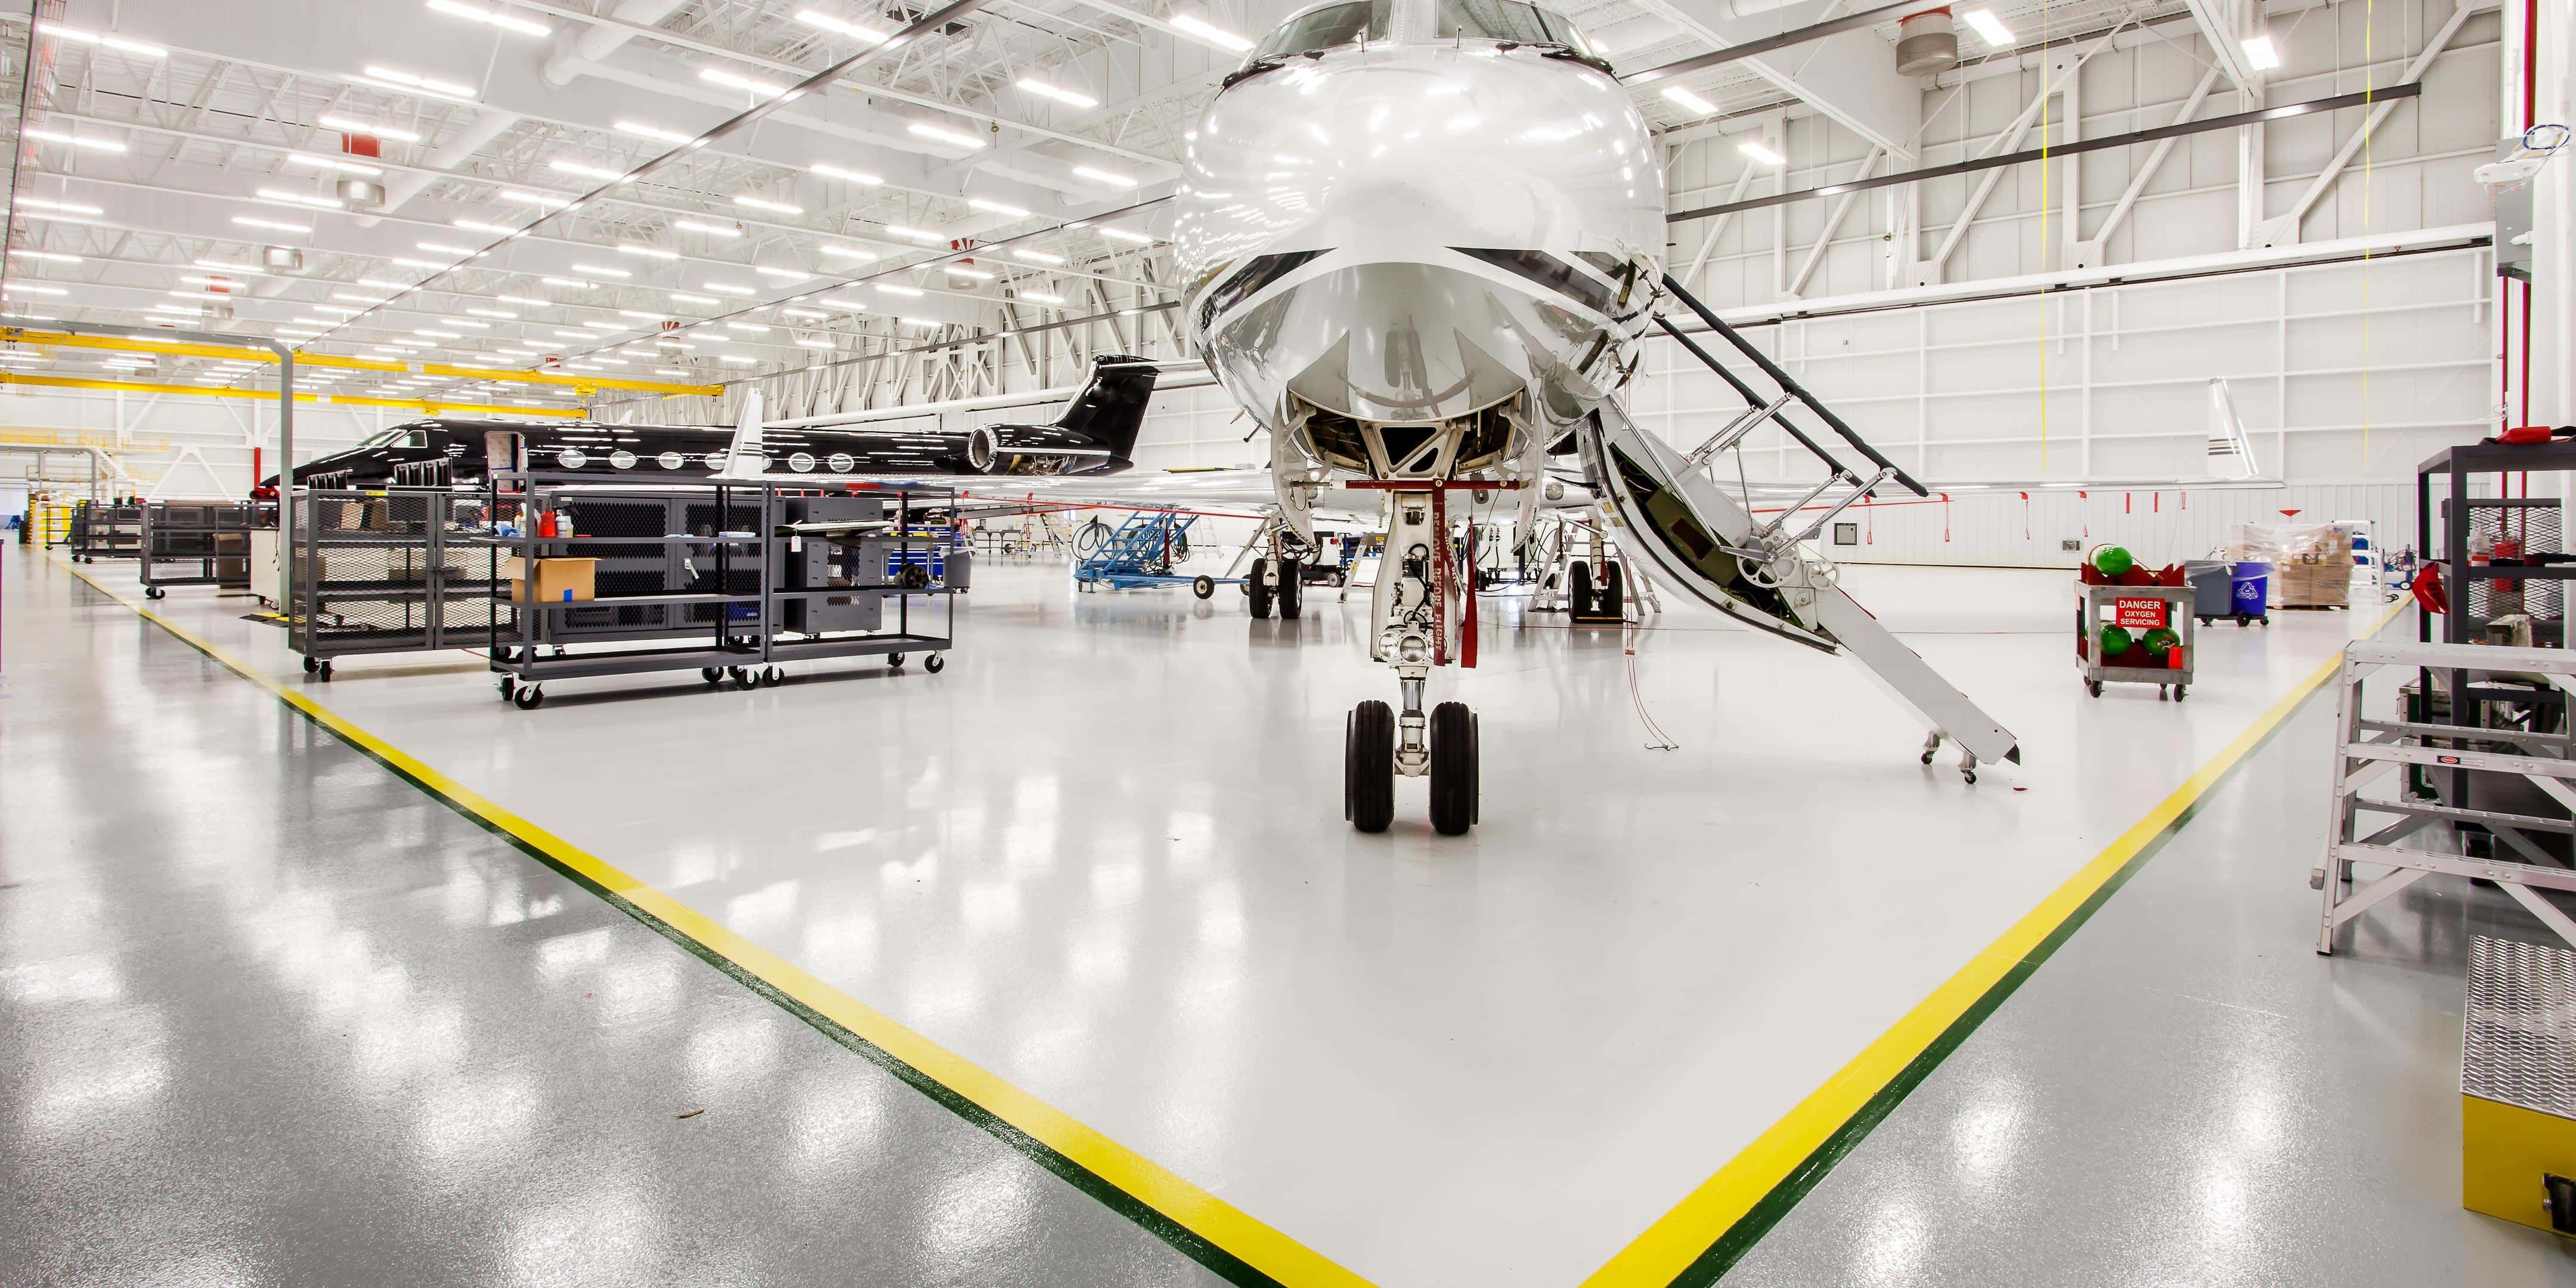 Resinous floor coating and sealant inside airplane hangar